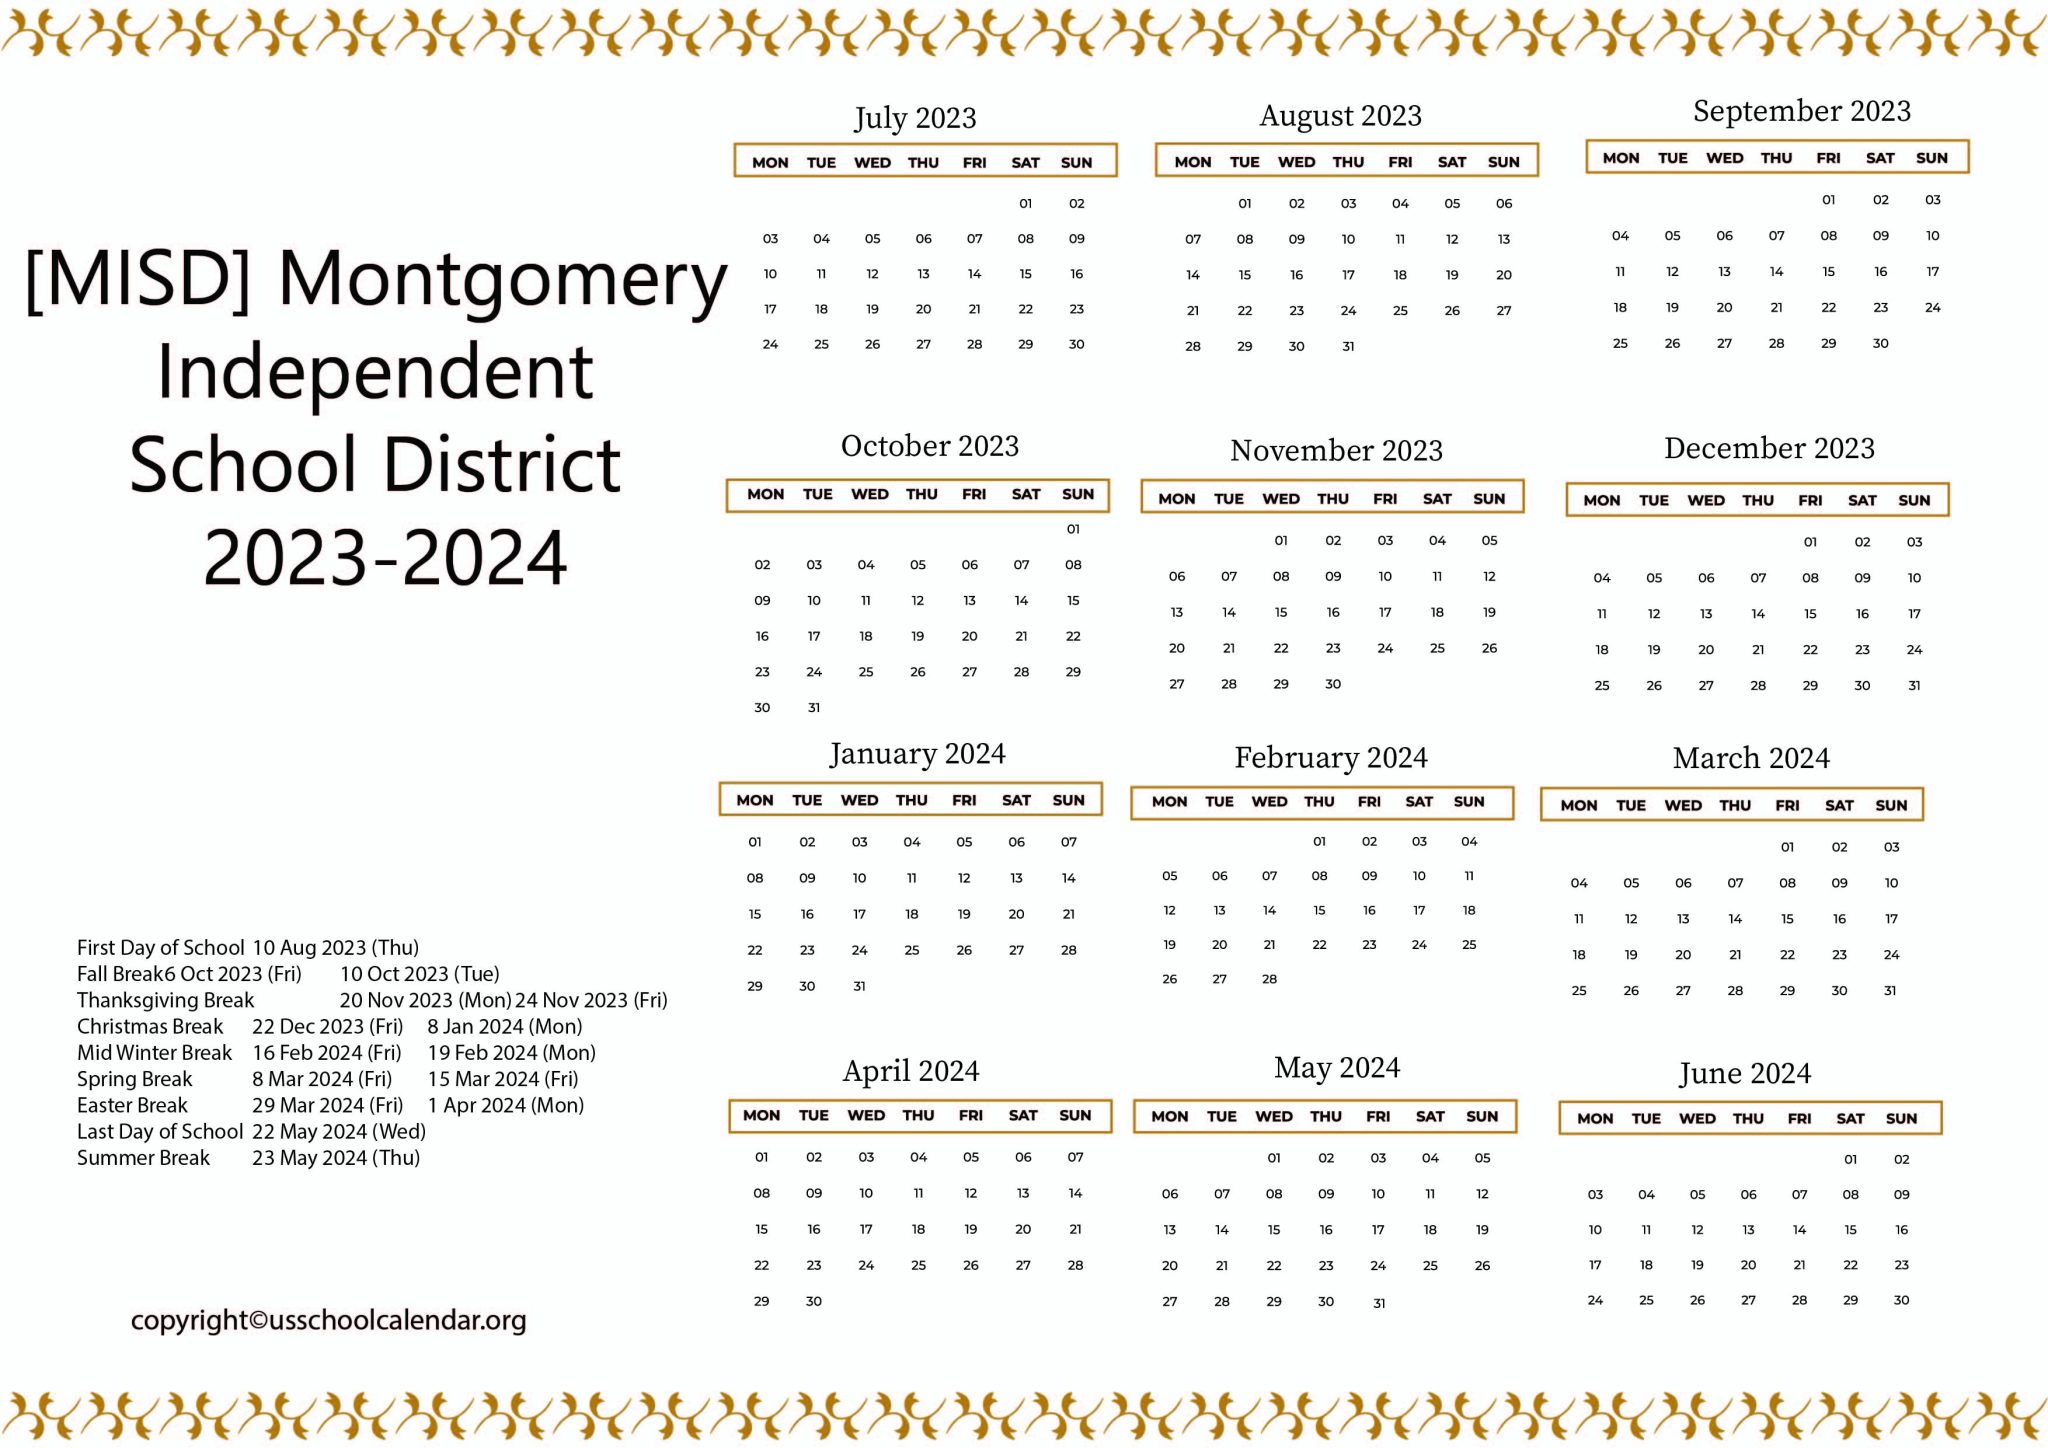 [MISD] Montgomery Independent School District Calendar 202324